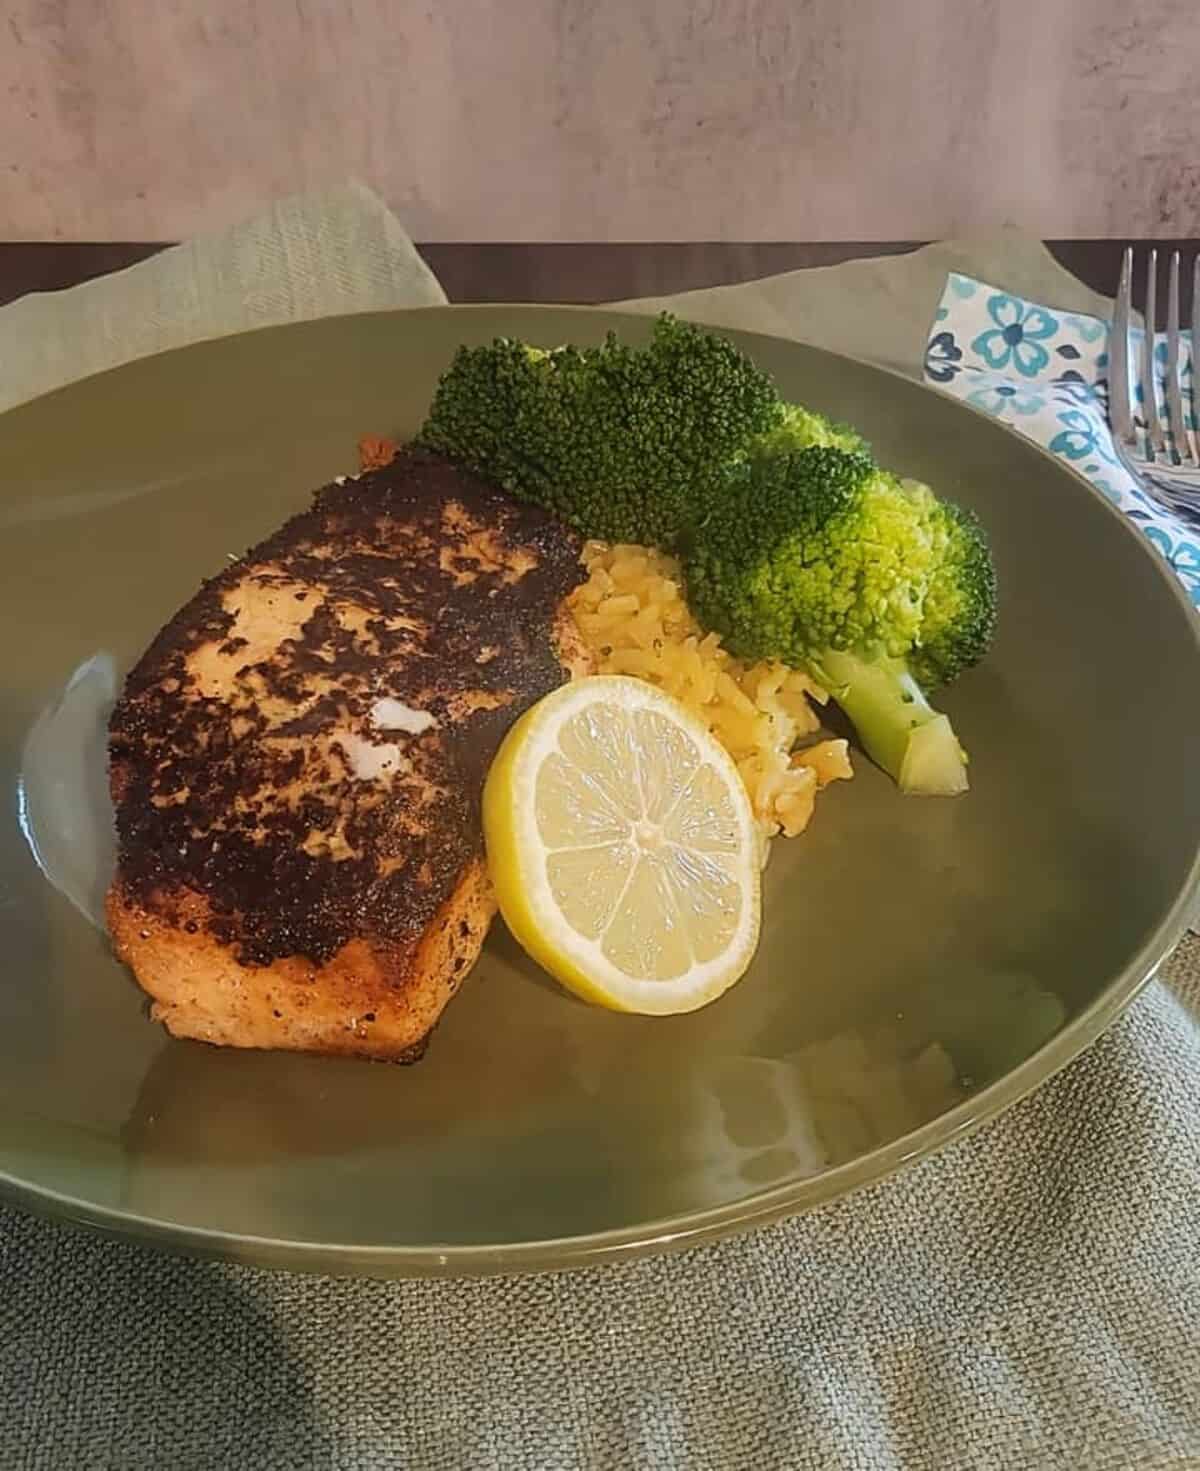 plated dijon rosemary salmon, with rice, broccoli, and lemon slice garnish